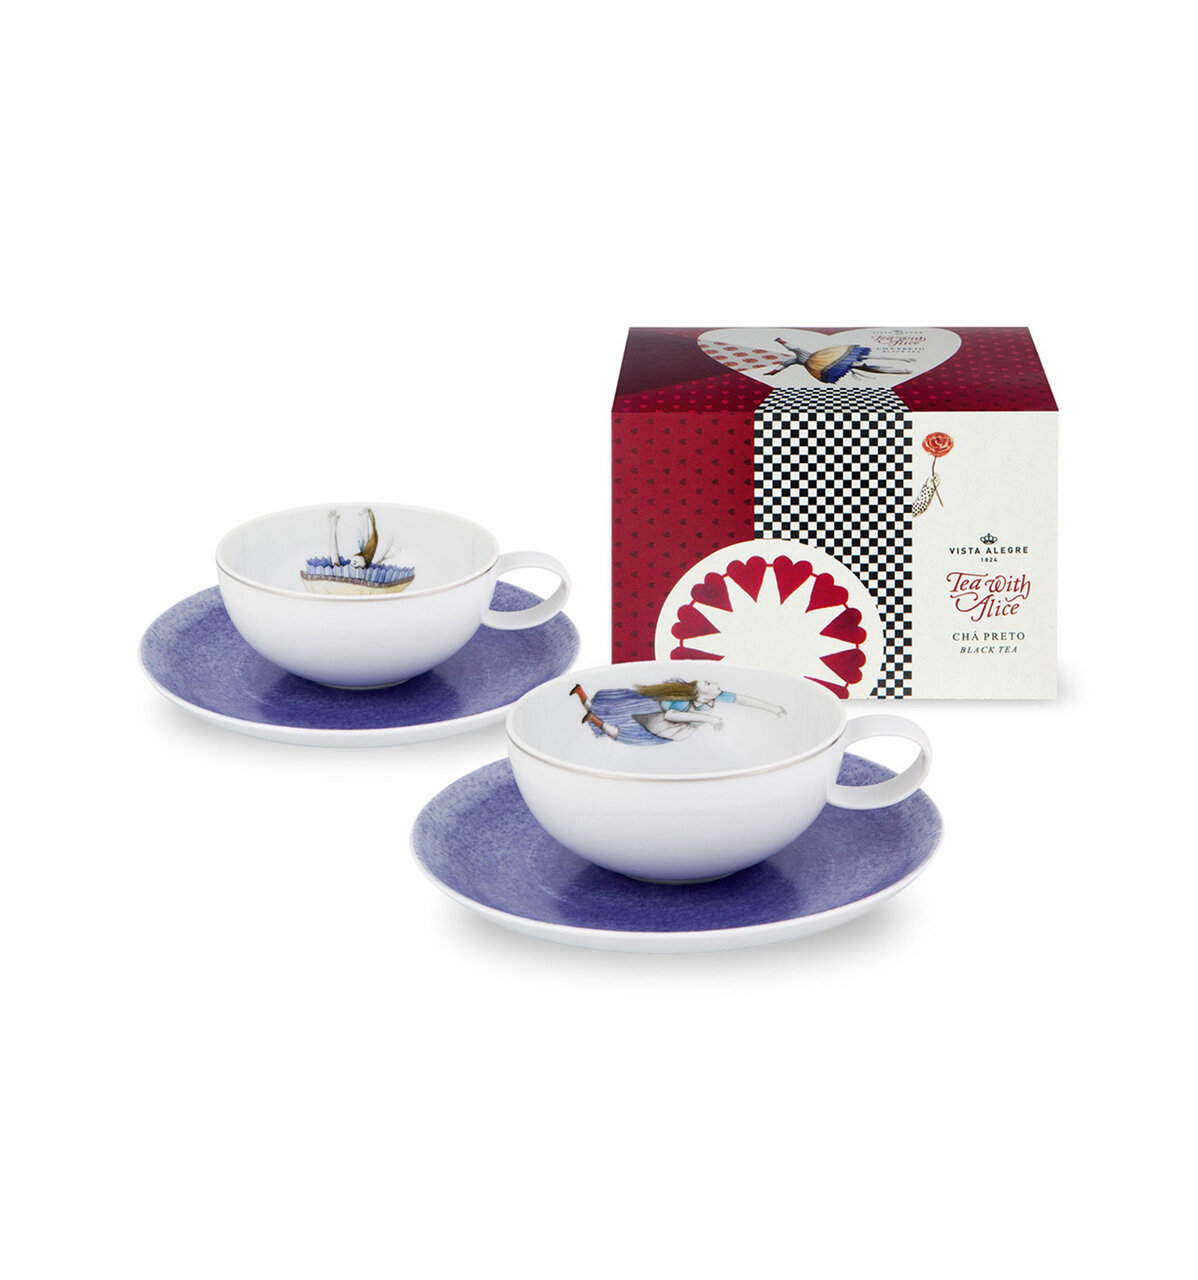 Vista Alegre Tea with Alice Set of 2 Tea Cup & Saucer Tea Bag with Gift Box